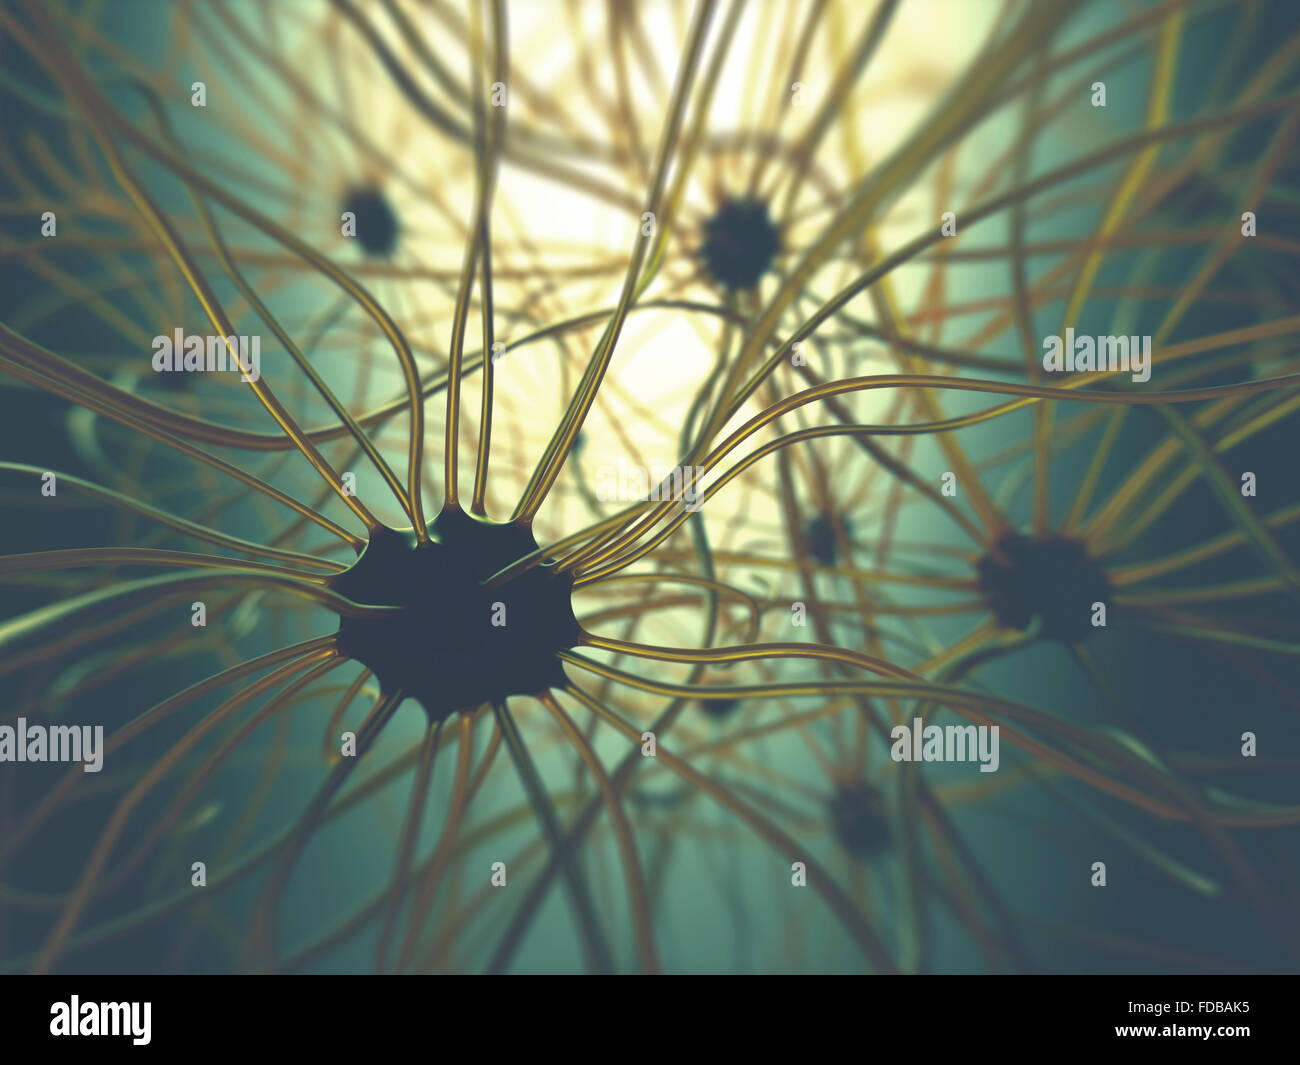 Human nerve cells, illustration. Stock Photo